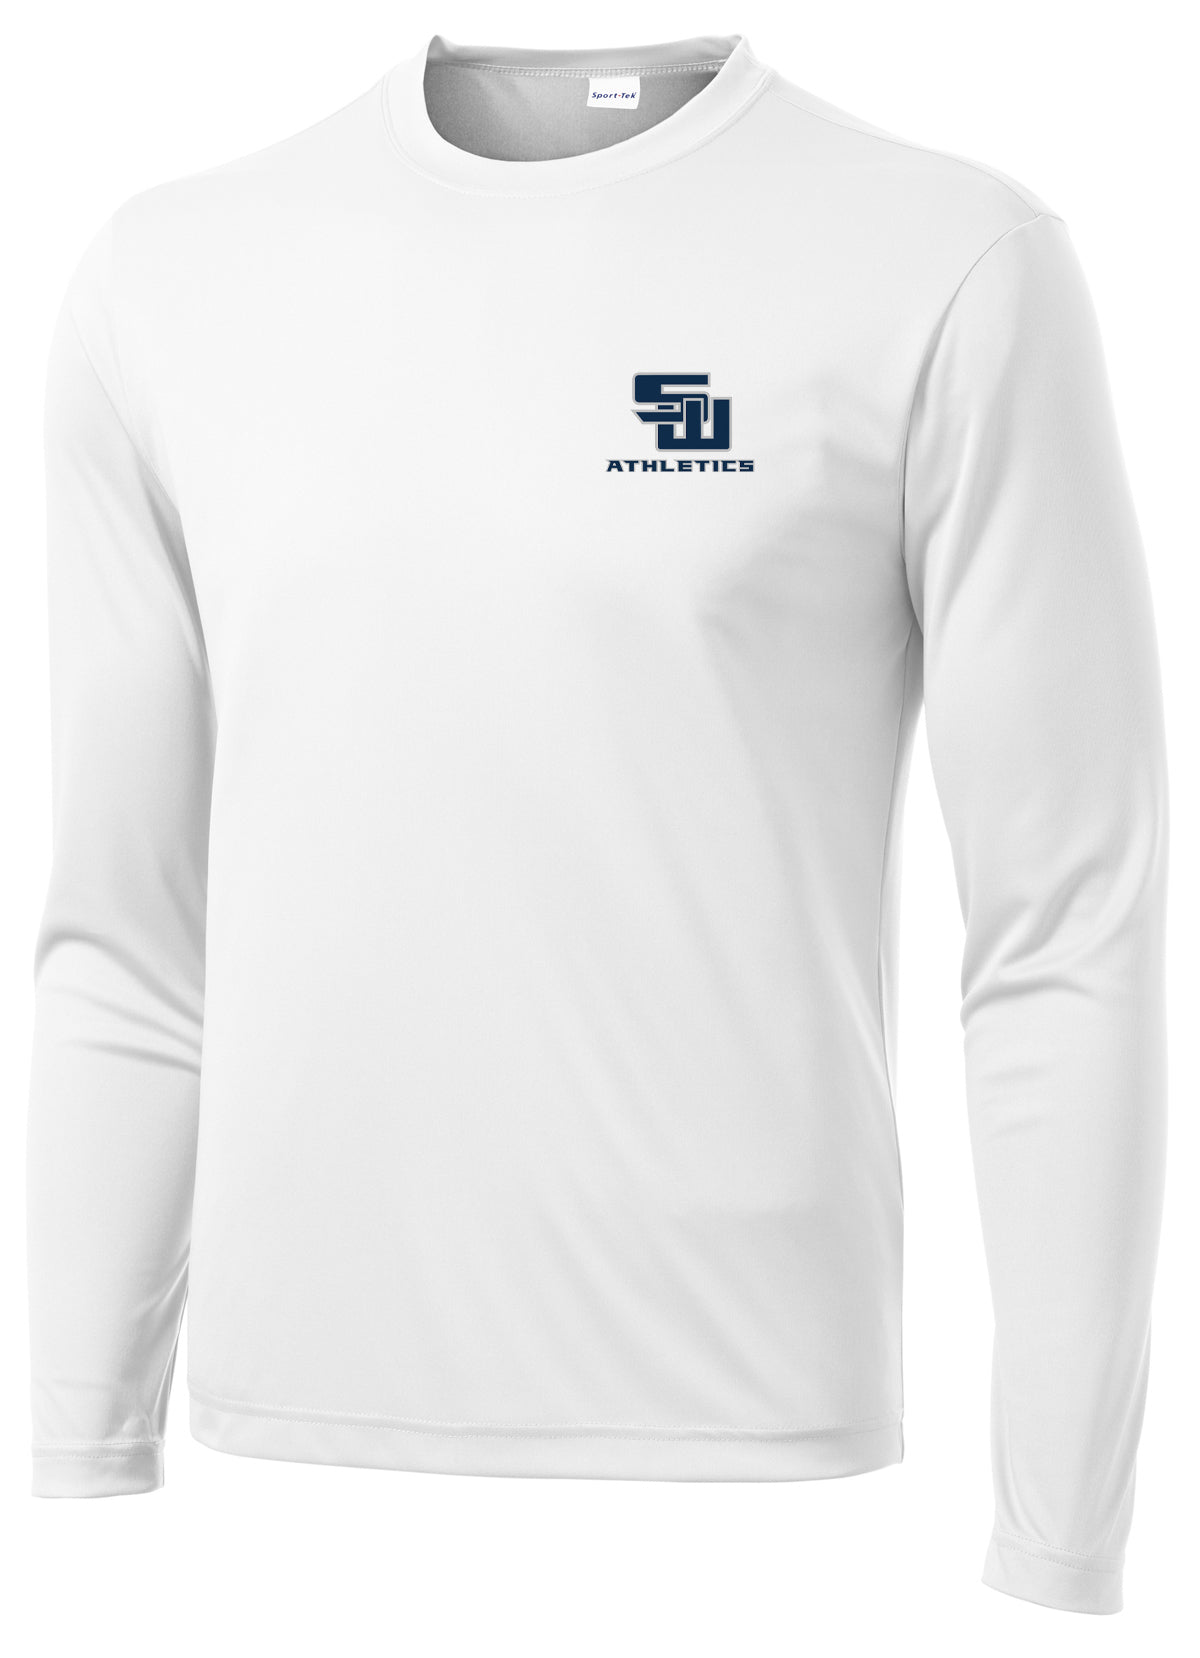 Smithtown West Athletics Long Sleeve Performance Shirt